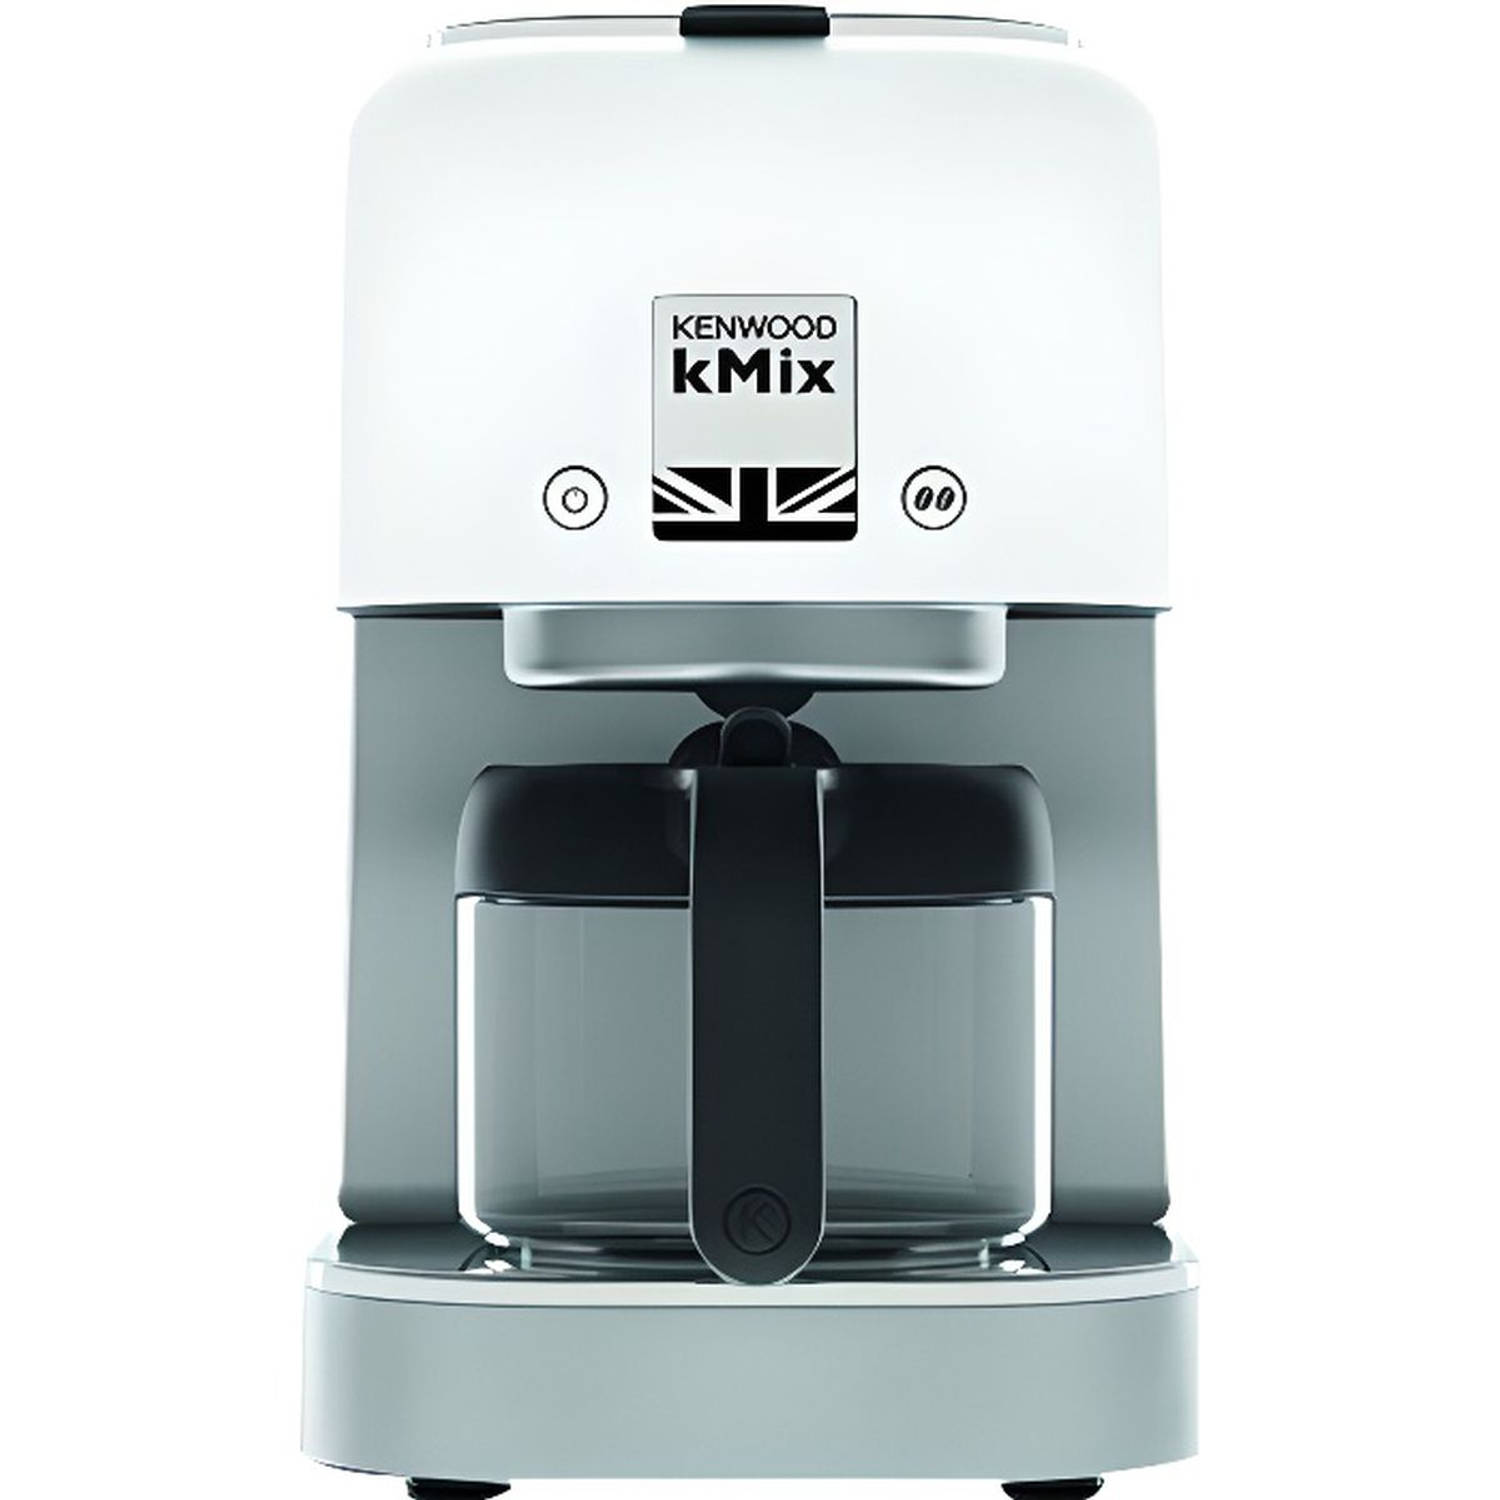 KENWOOD COX750WH Koffiefilter kMix - 1200 W - Blanc